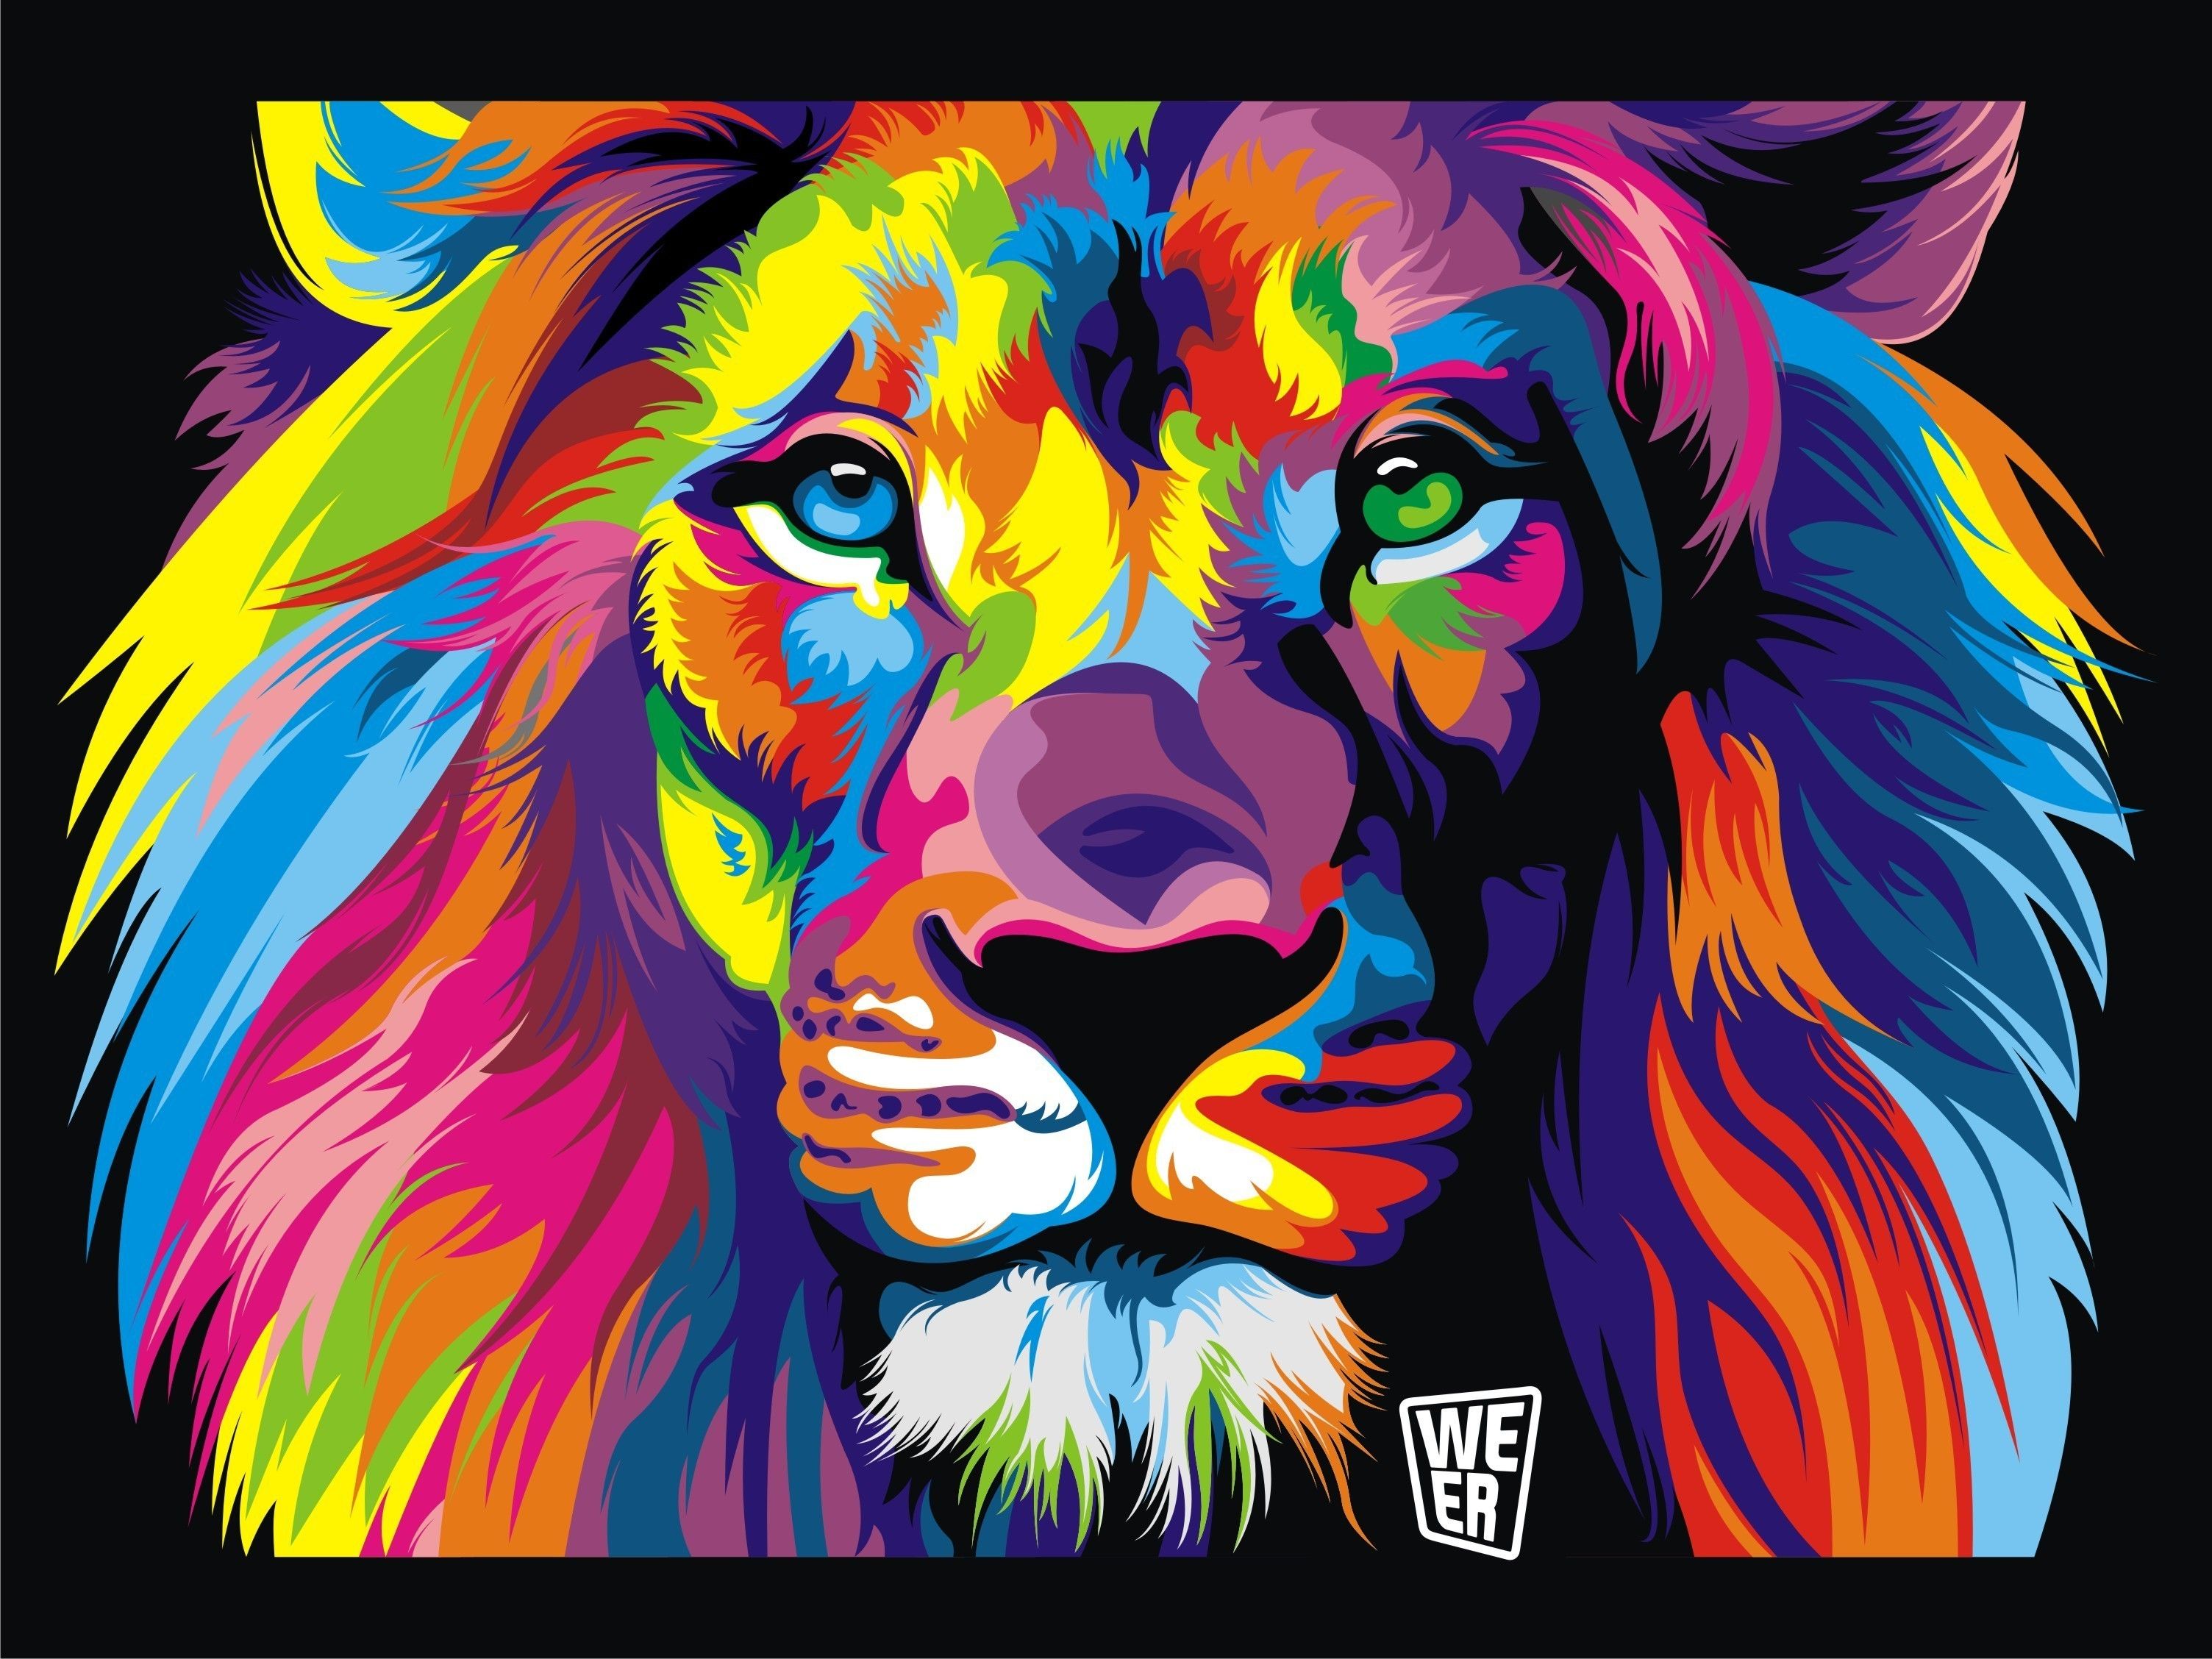 Wallpaper, colorful, illustration, digital art, animals, black background, artwork, tiger, lion, big cats, roar, ART, modern art, cat like mammal, psychedelic art 3008x2256